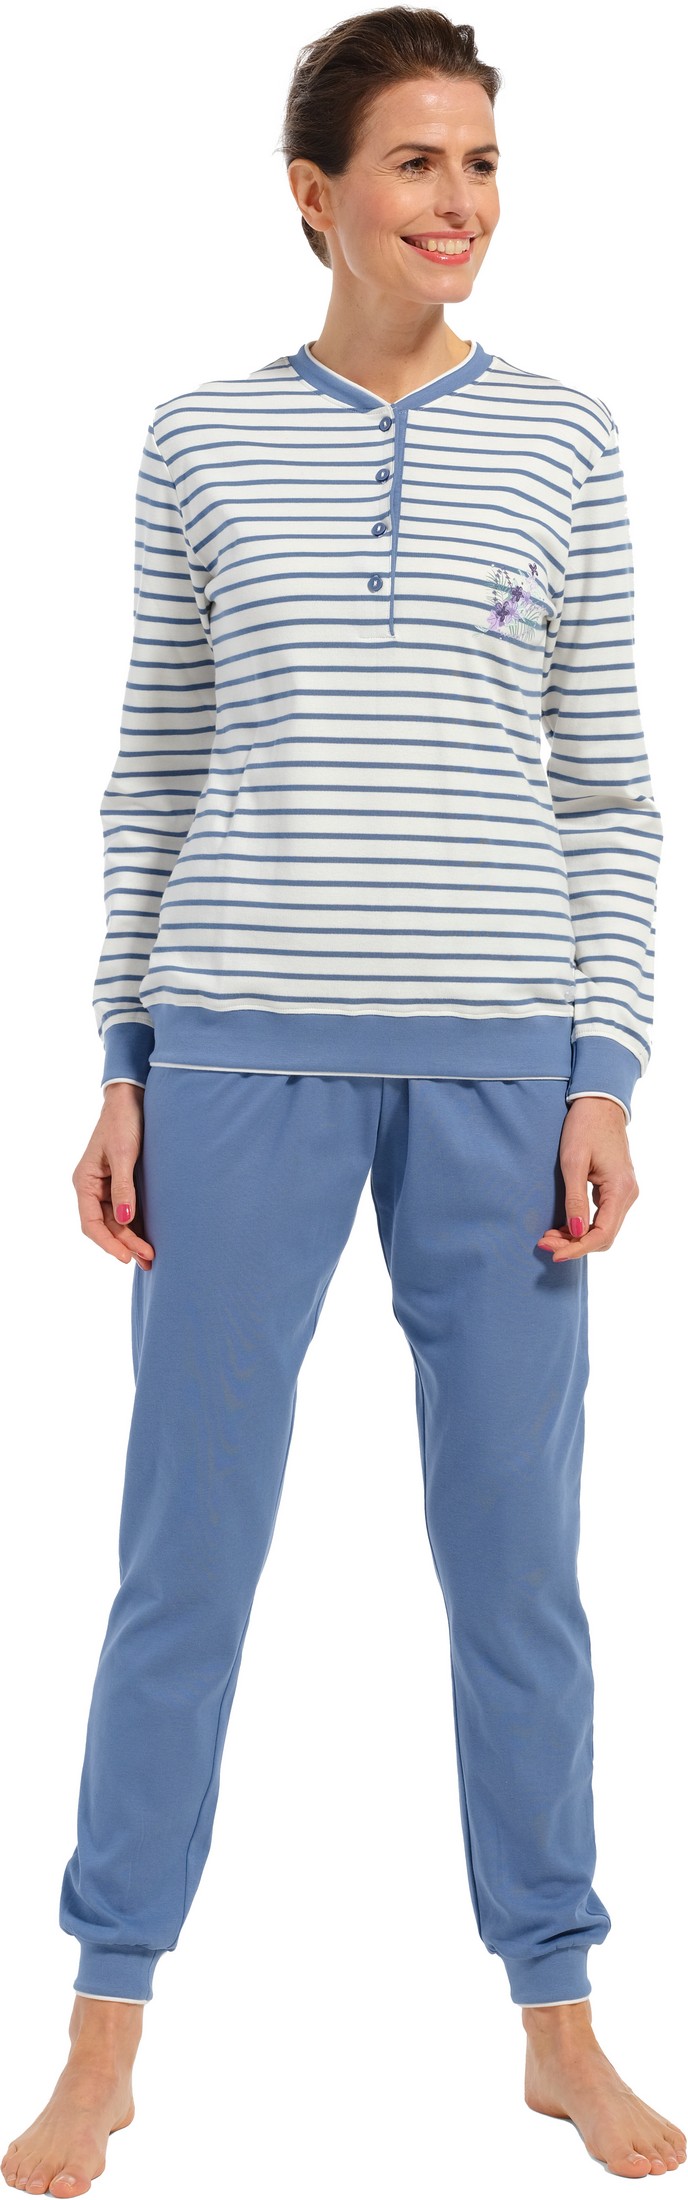 Pastunette dames pyjama katoen 20232-172-4 - Blauw - 42